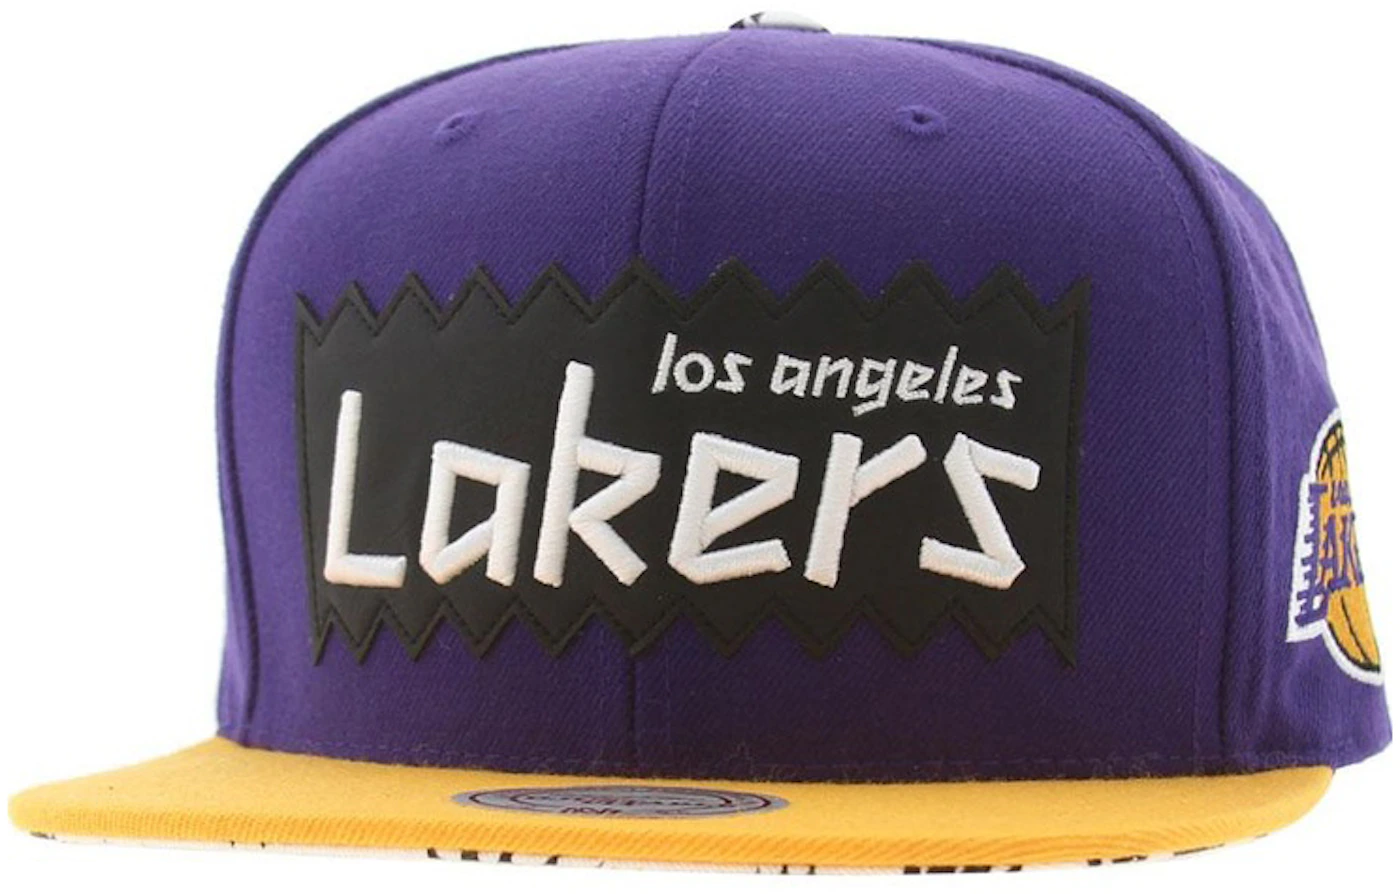 LOS ANGELES LAKERS - BASEBALL CAP PURPLE